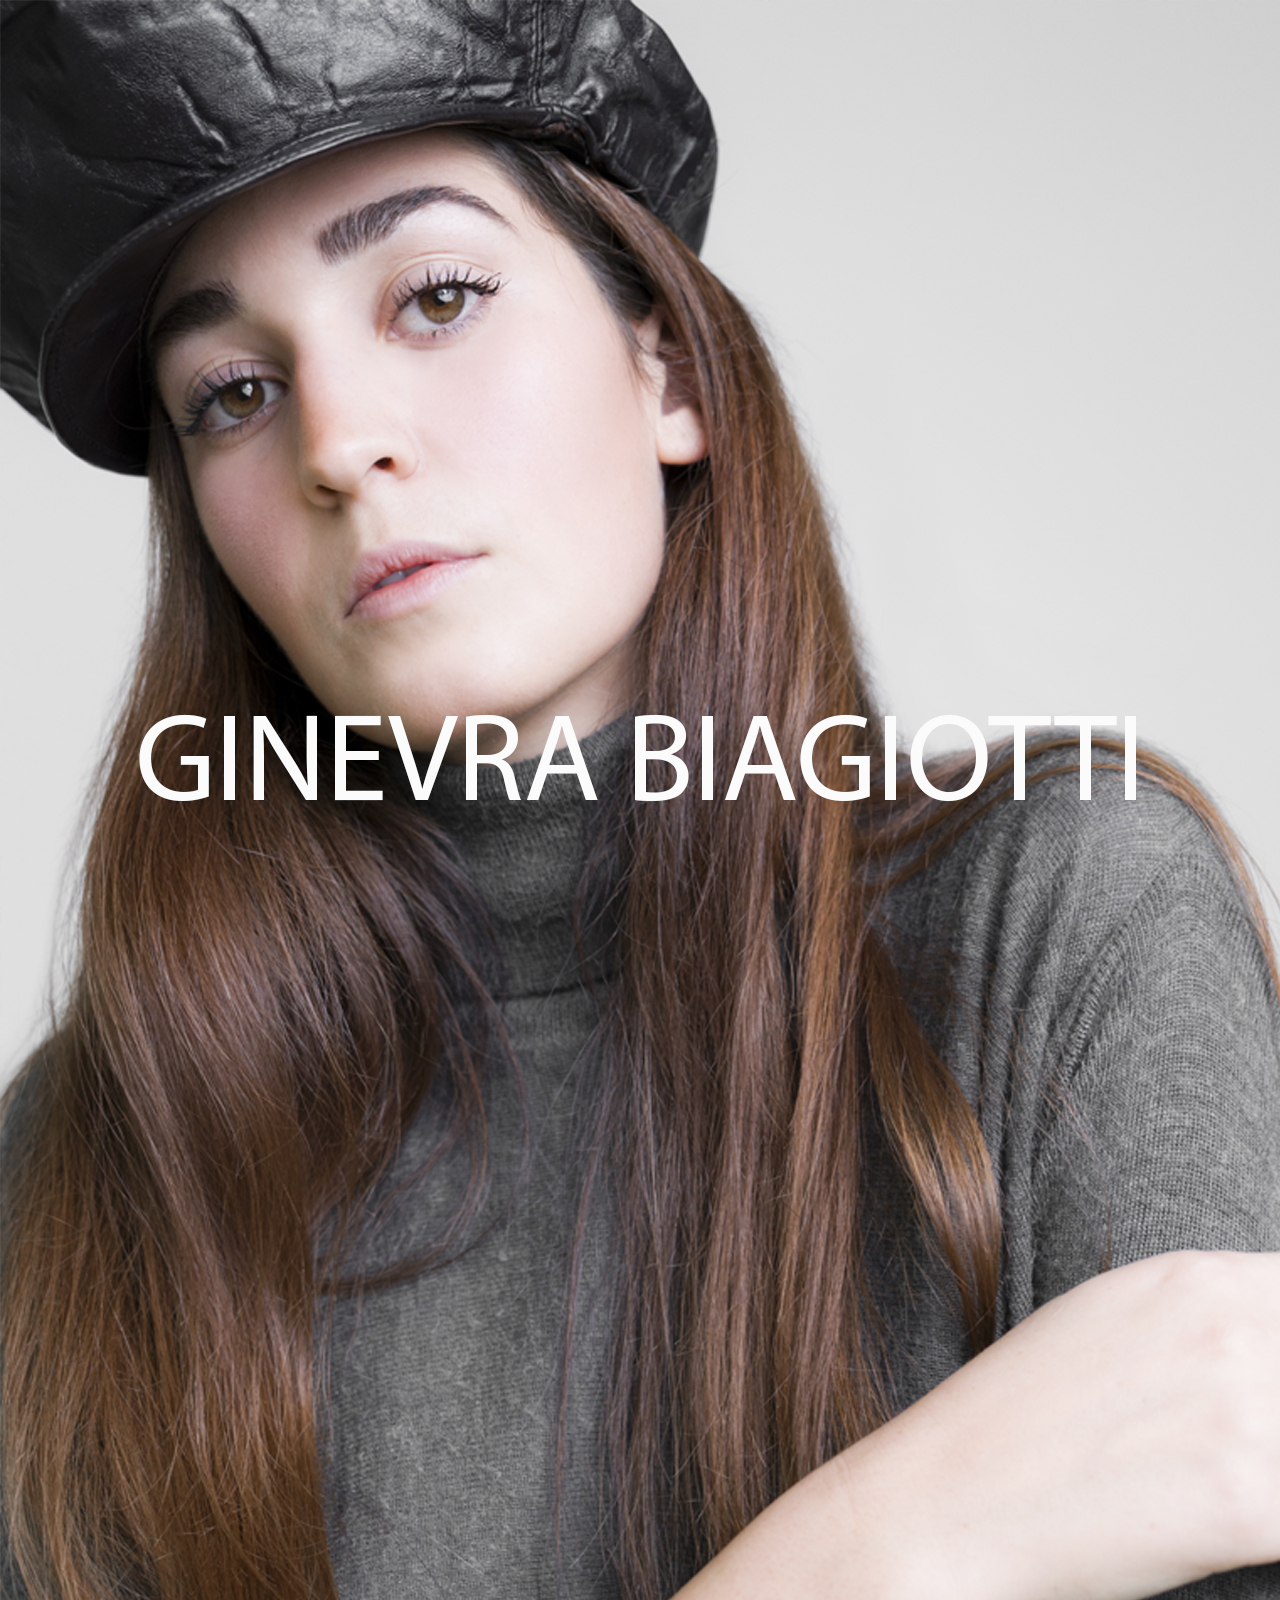 Ginevra Biagiotti by Andrea Reina